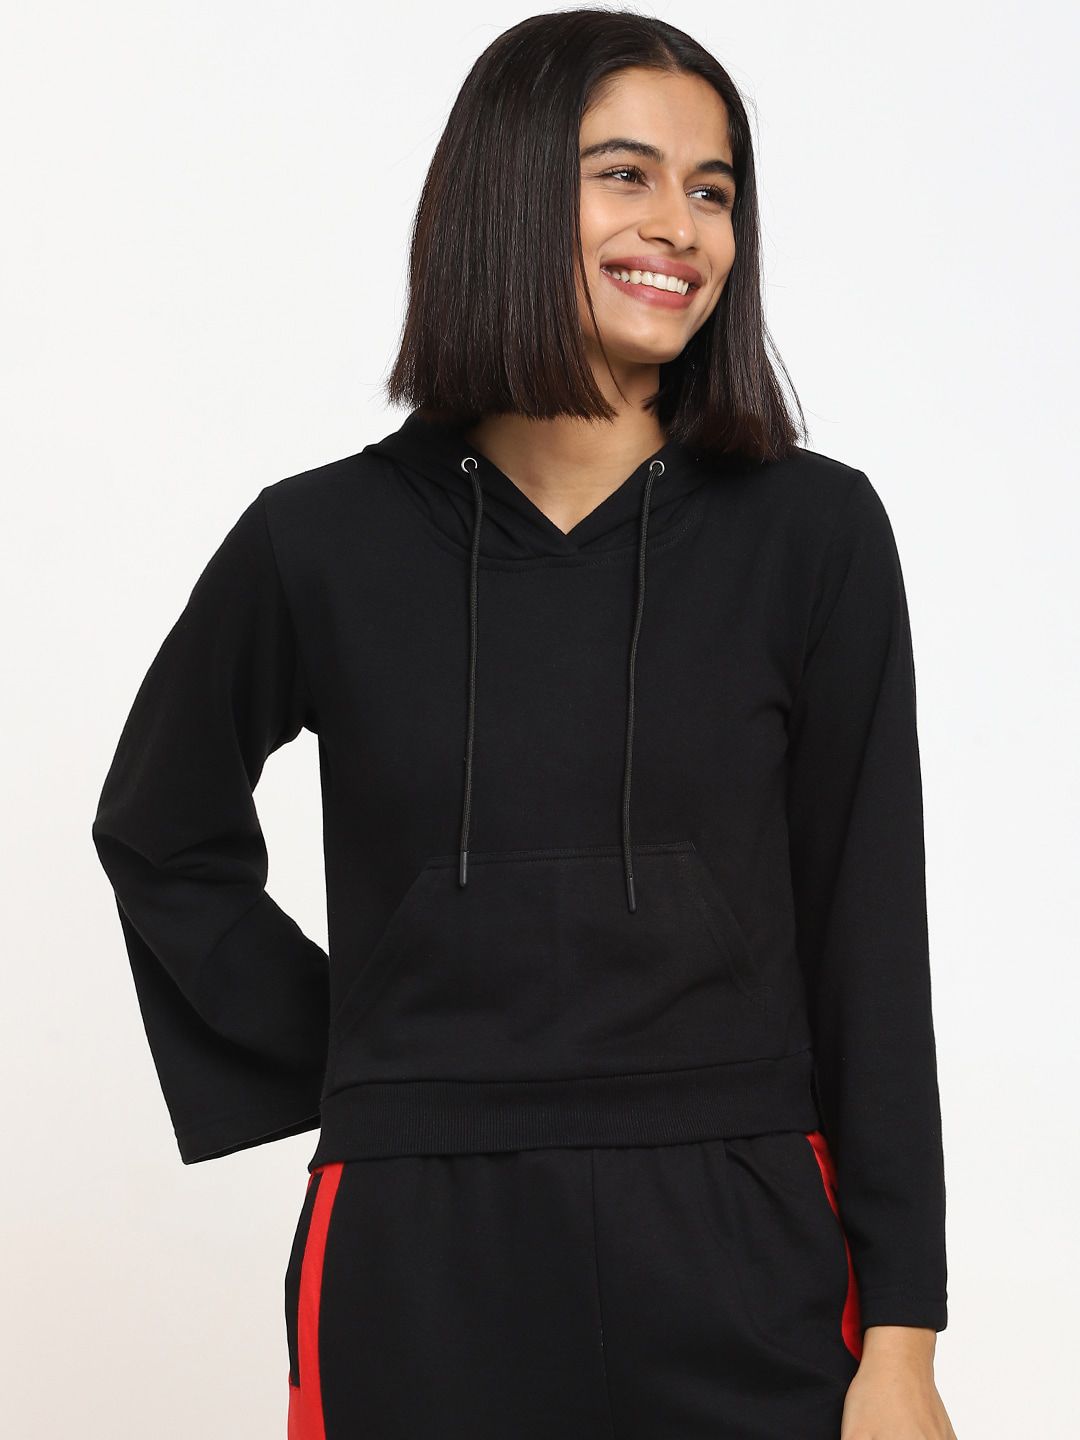 Bewakoof Women Black Hooded Sweatshirt Price in India